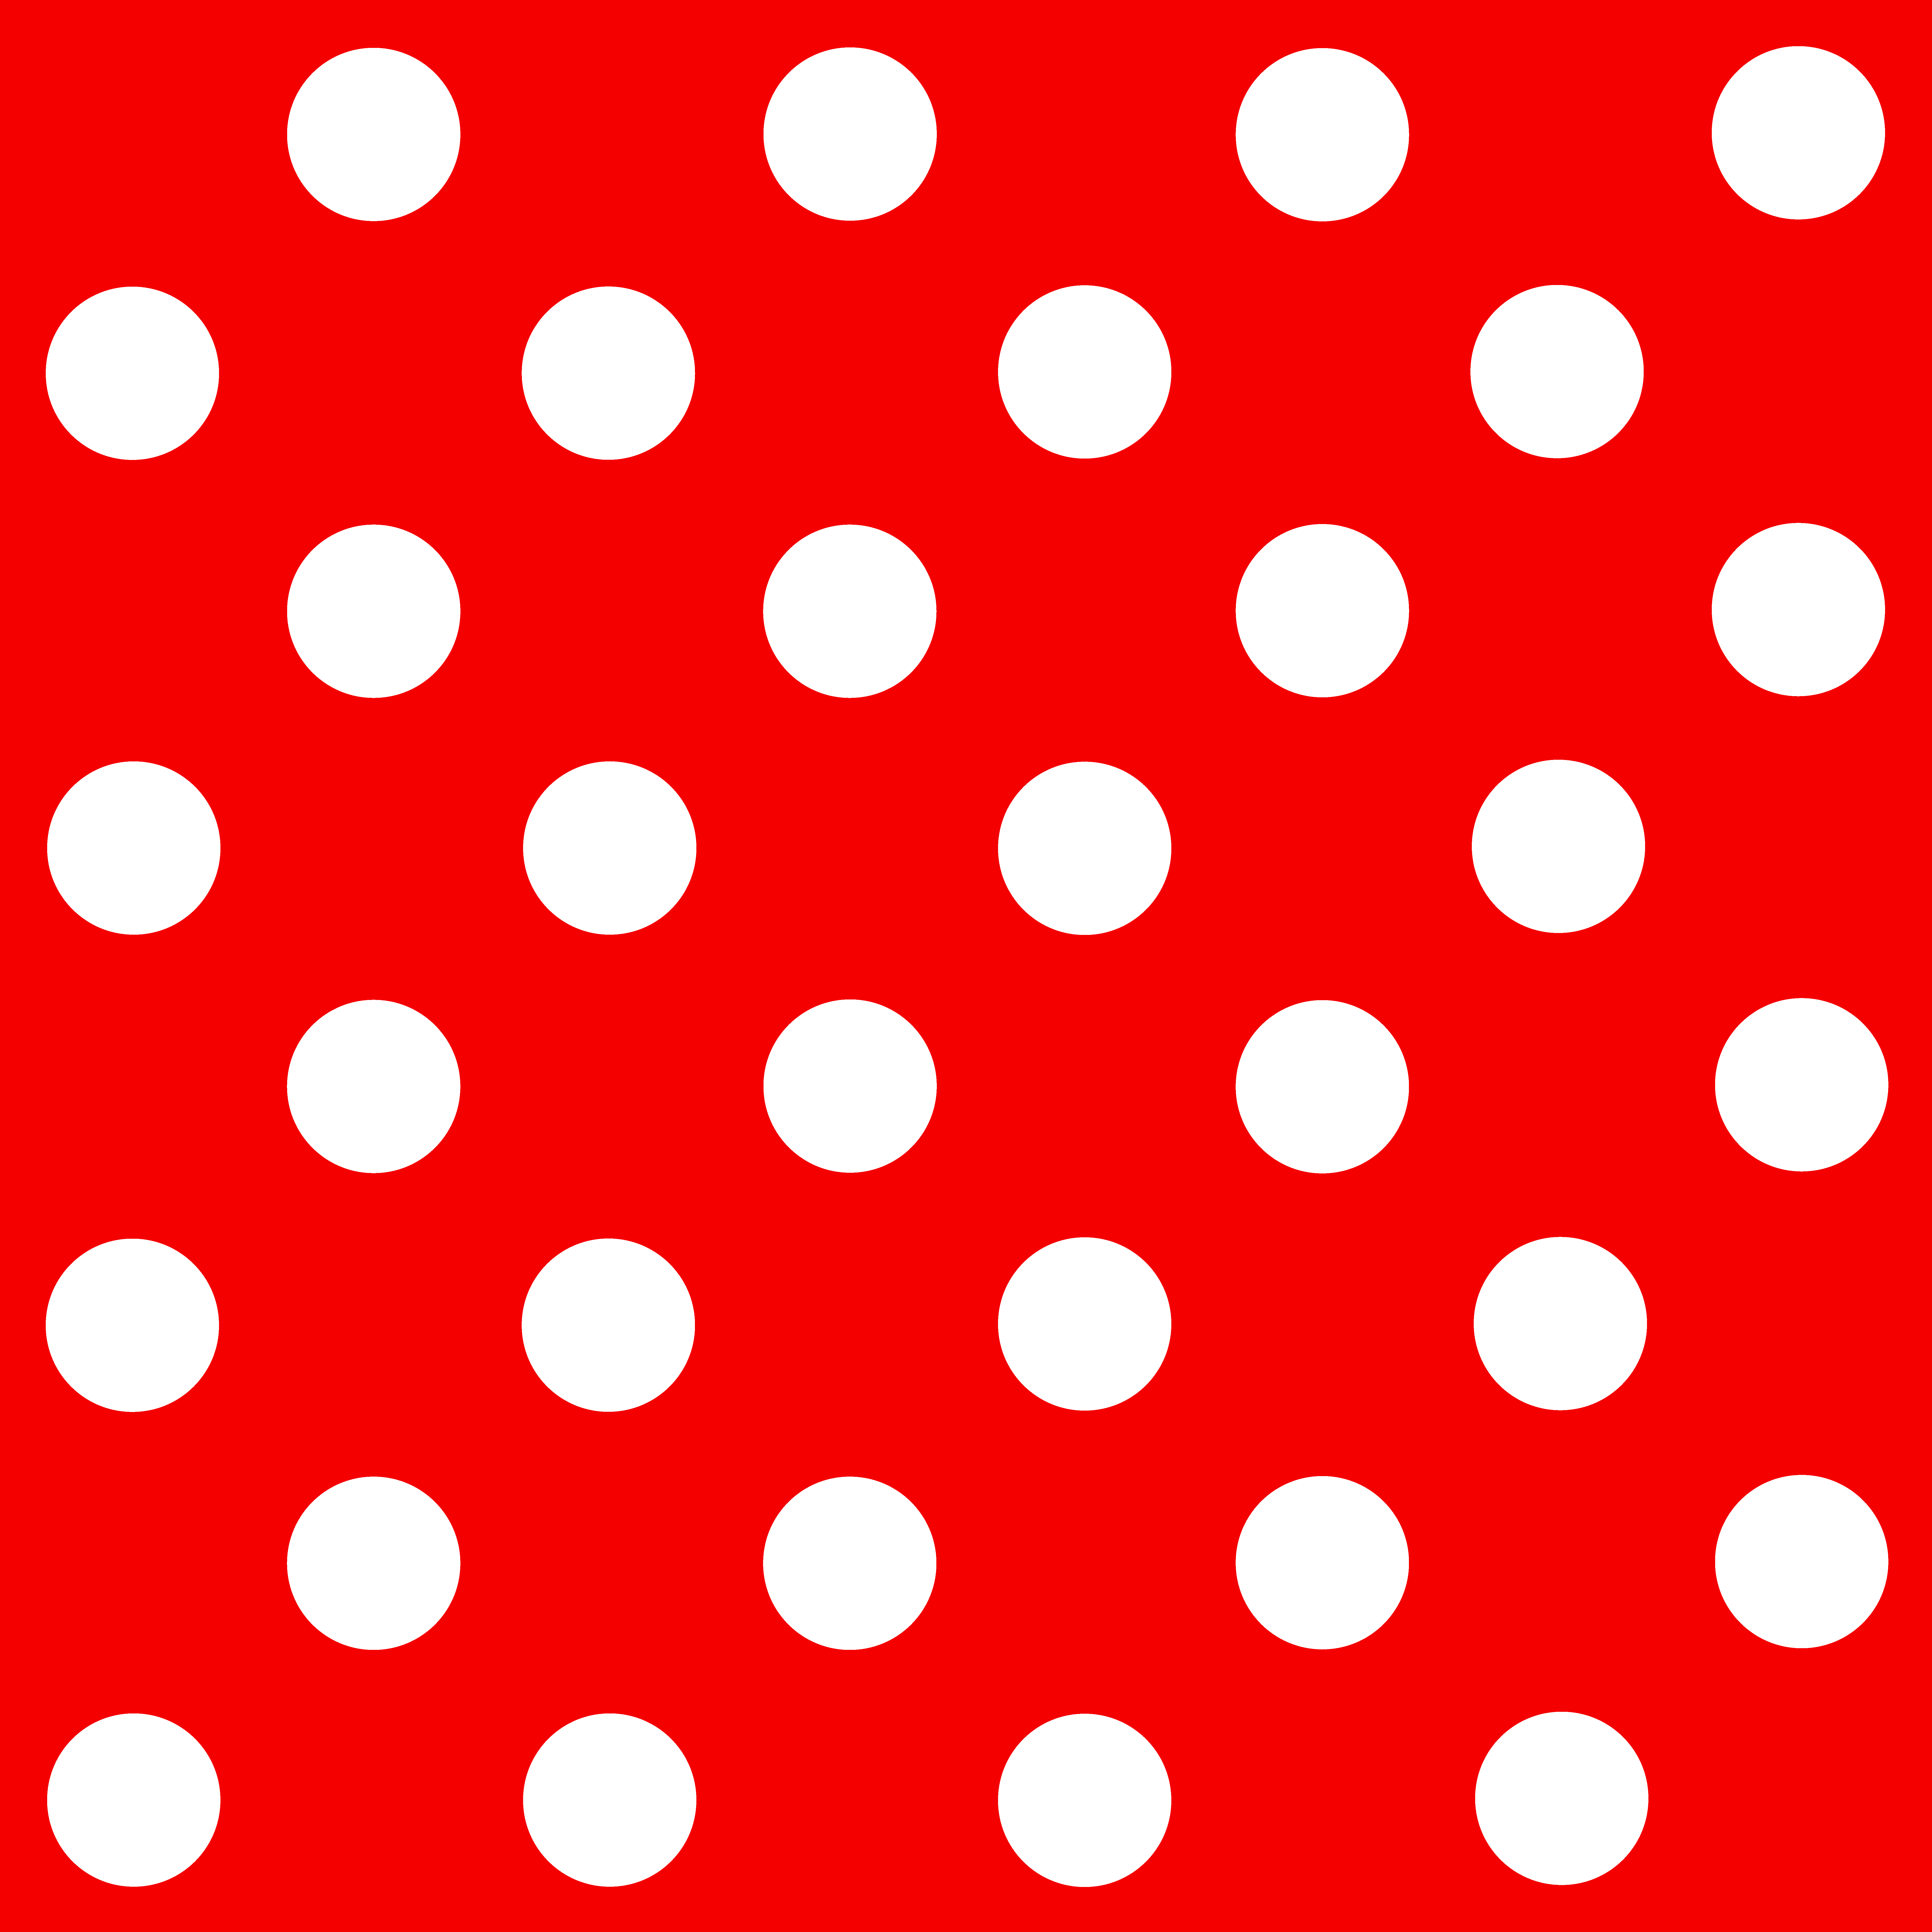 Free Polka Dot Border Clip Art - Cliparts.co